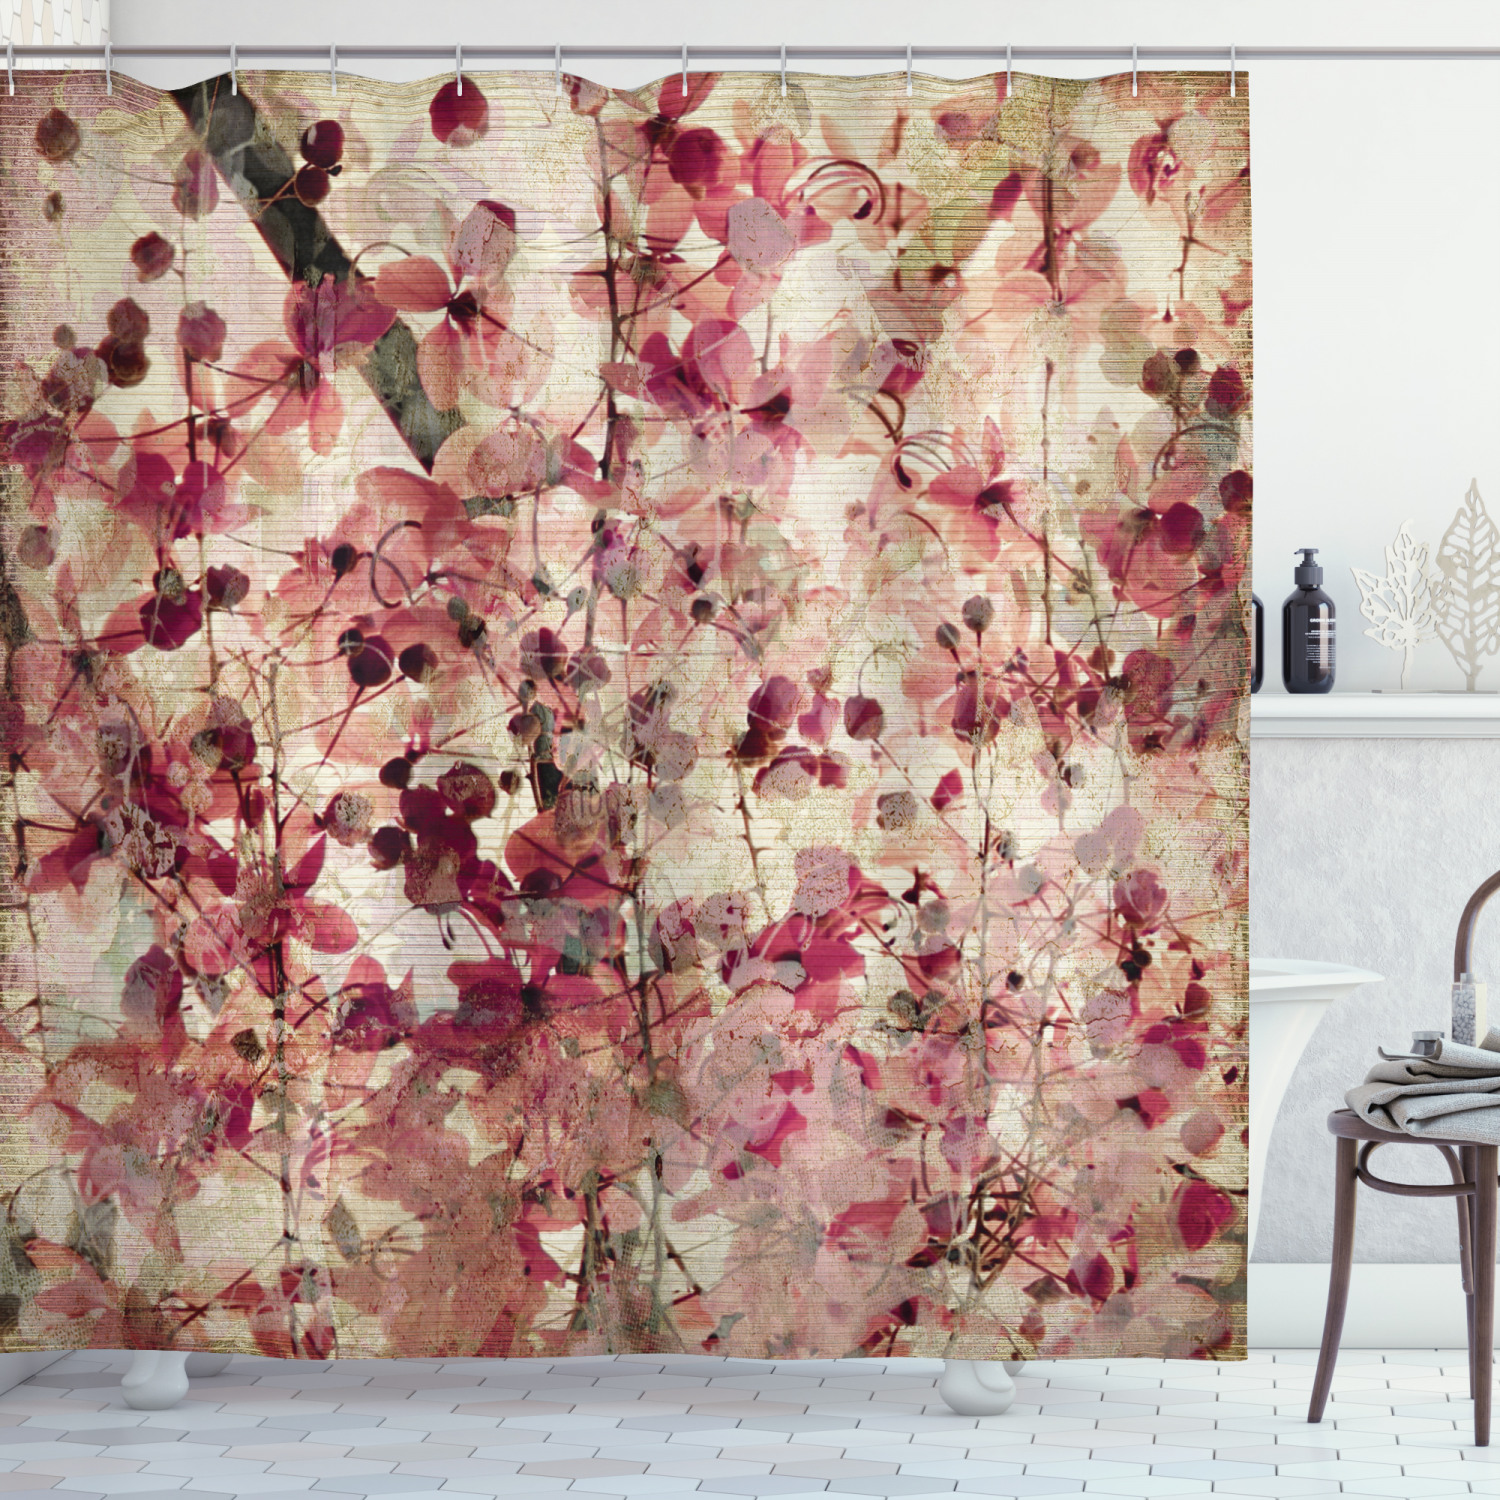 Retro Shower Curtain Cherry Blossoms Floral Print for Bathroom 